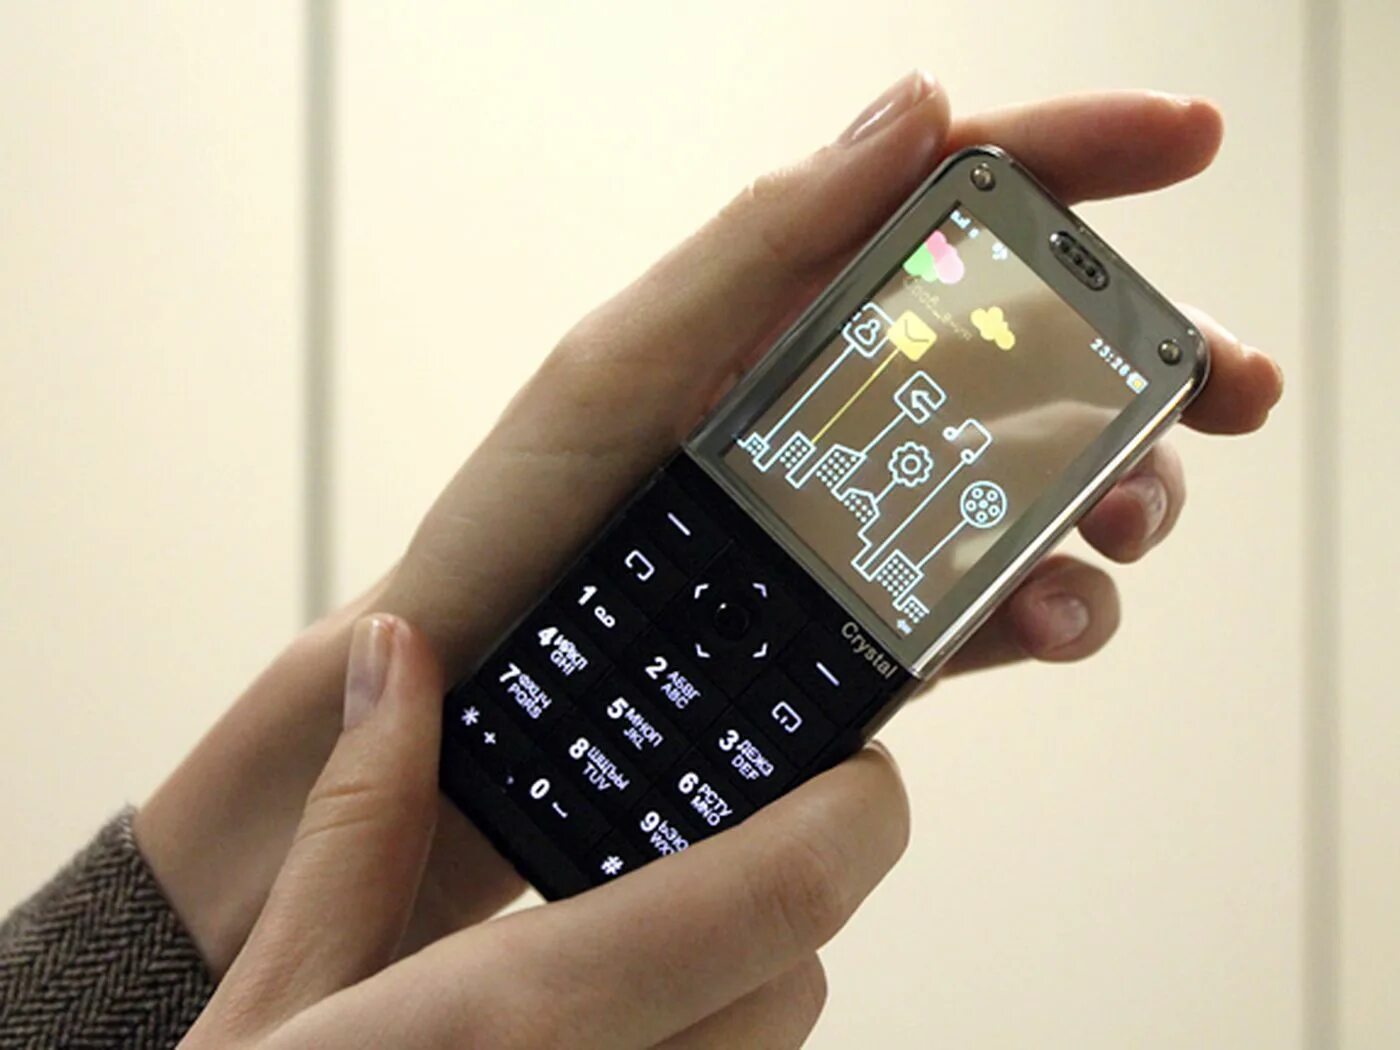 Sony xperia pureness. Sony Ericsson Xperia Pureness x5. Смартфон прозрачным экраном Explay Crystal. Explay Crystal с прозрачным экраном. Телефон с прозрачным экраном Explay.